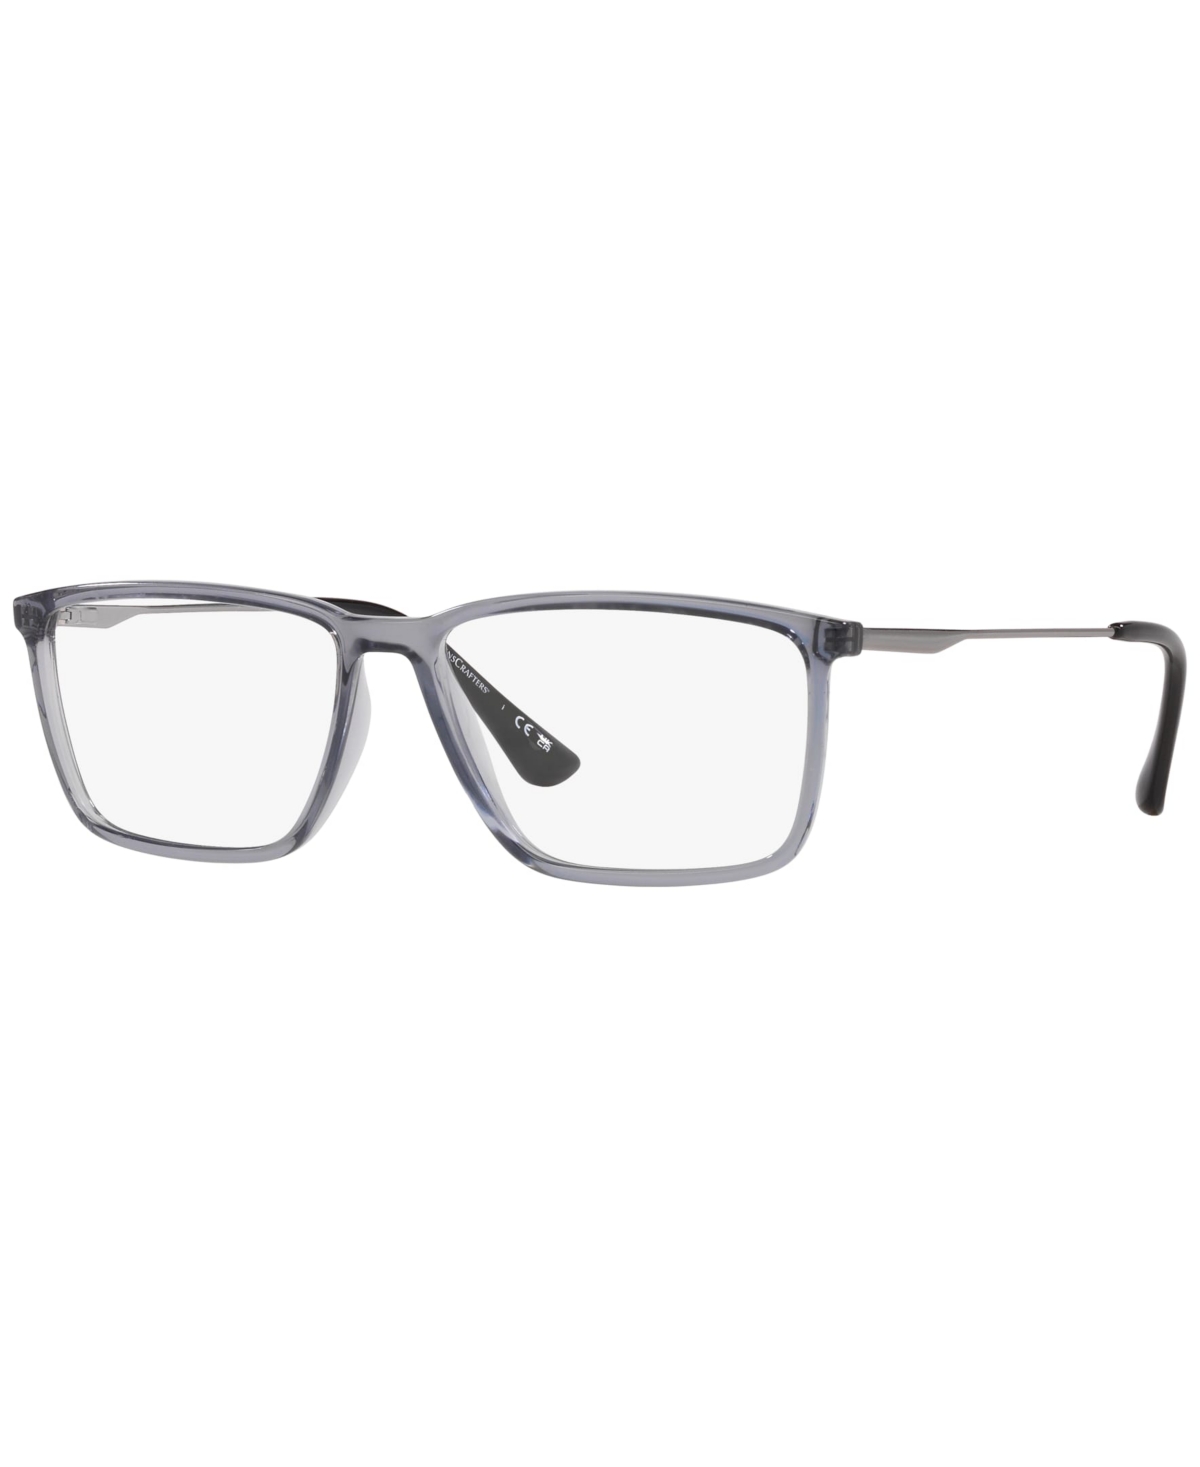 Men's Eyeglasses, EC3501 - Dark Havana